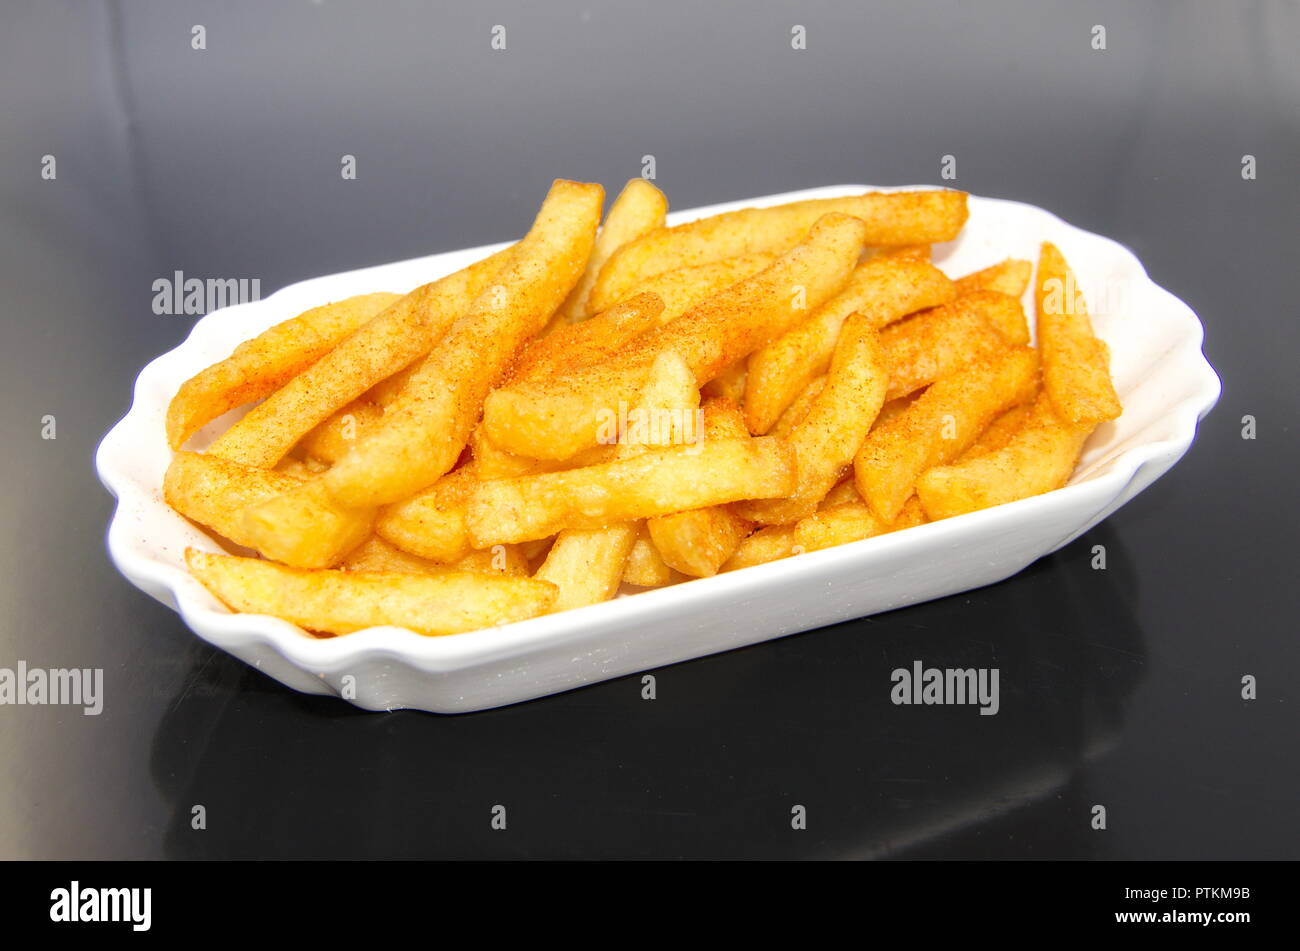 Porzellanschale mit porzione patatine fritte Foto Stock